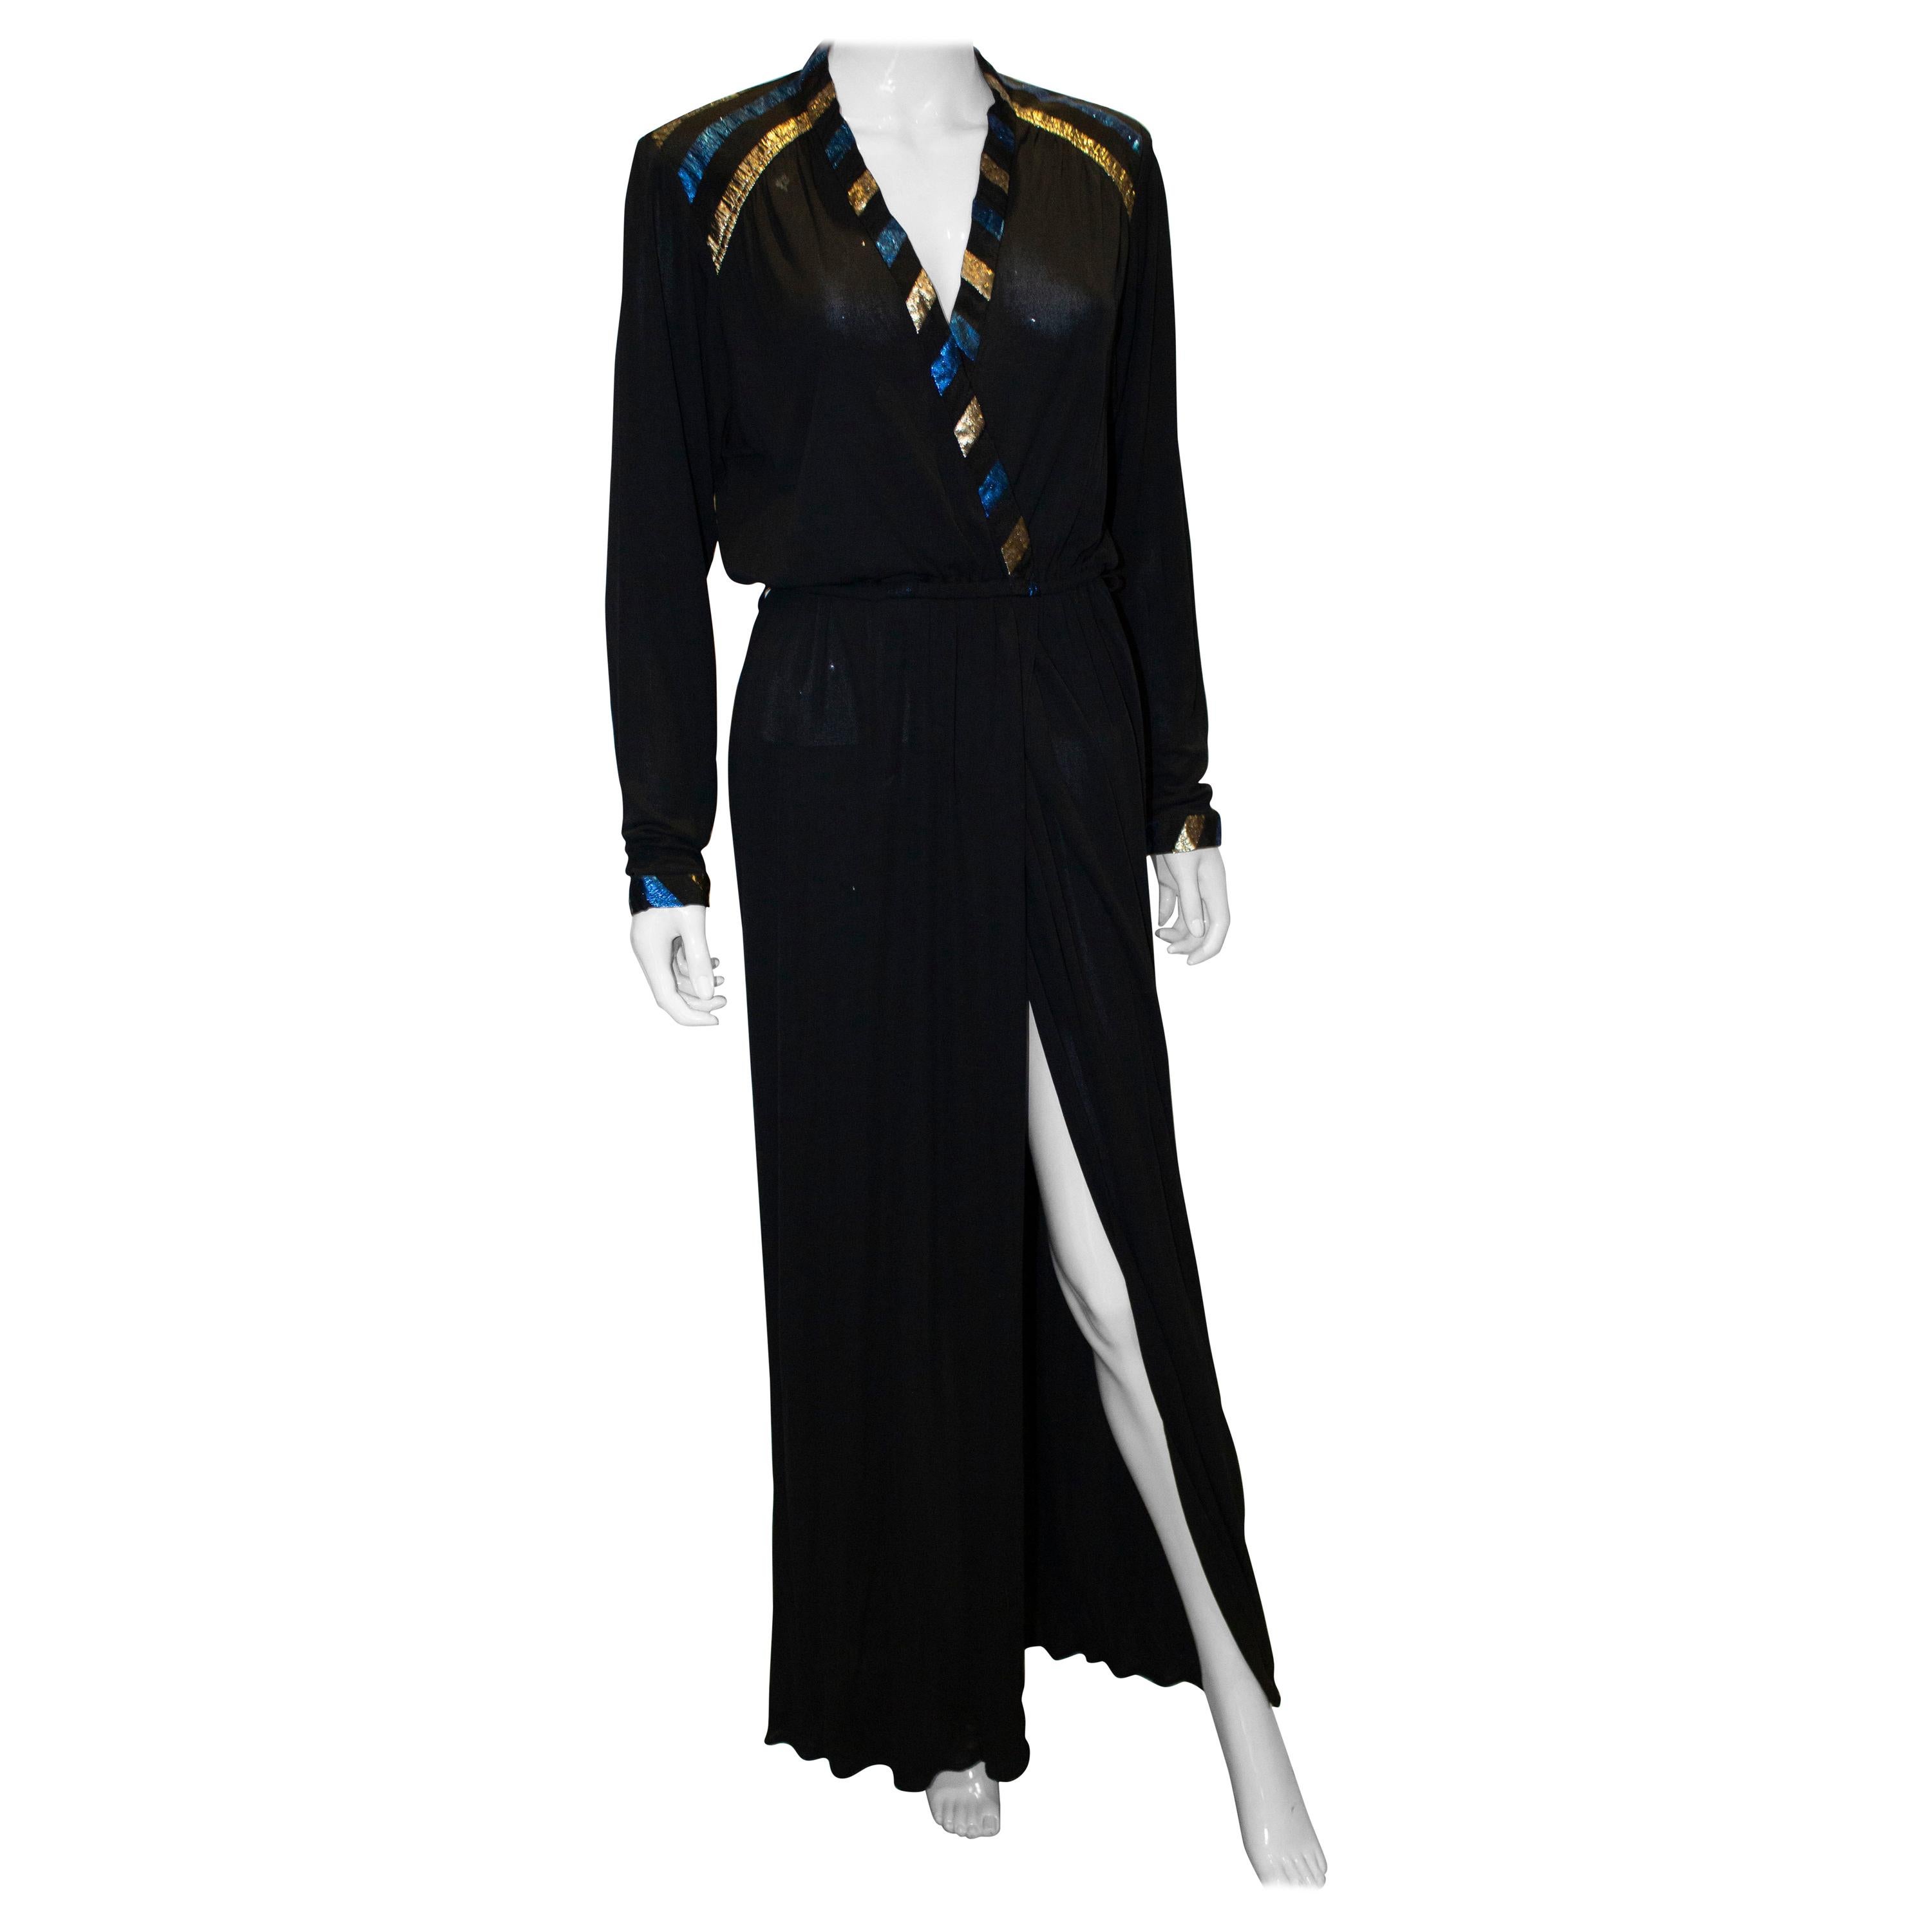 Vintage Roland Klein Black, Blue and Gold Evening Dress